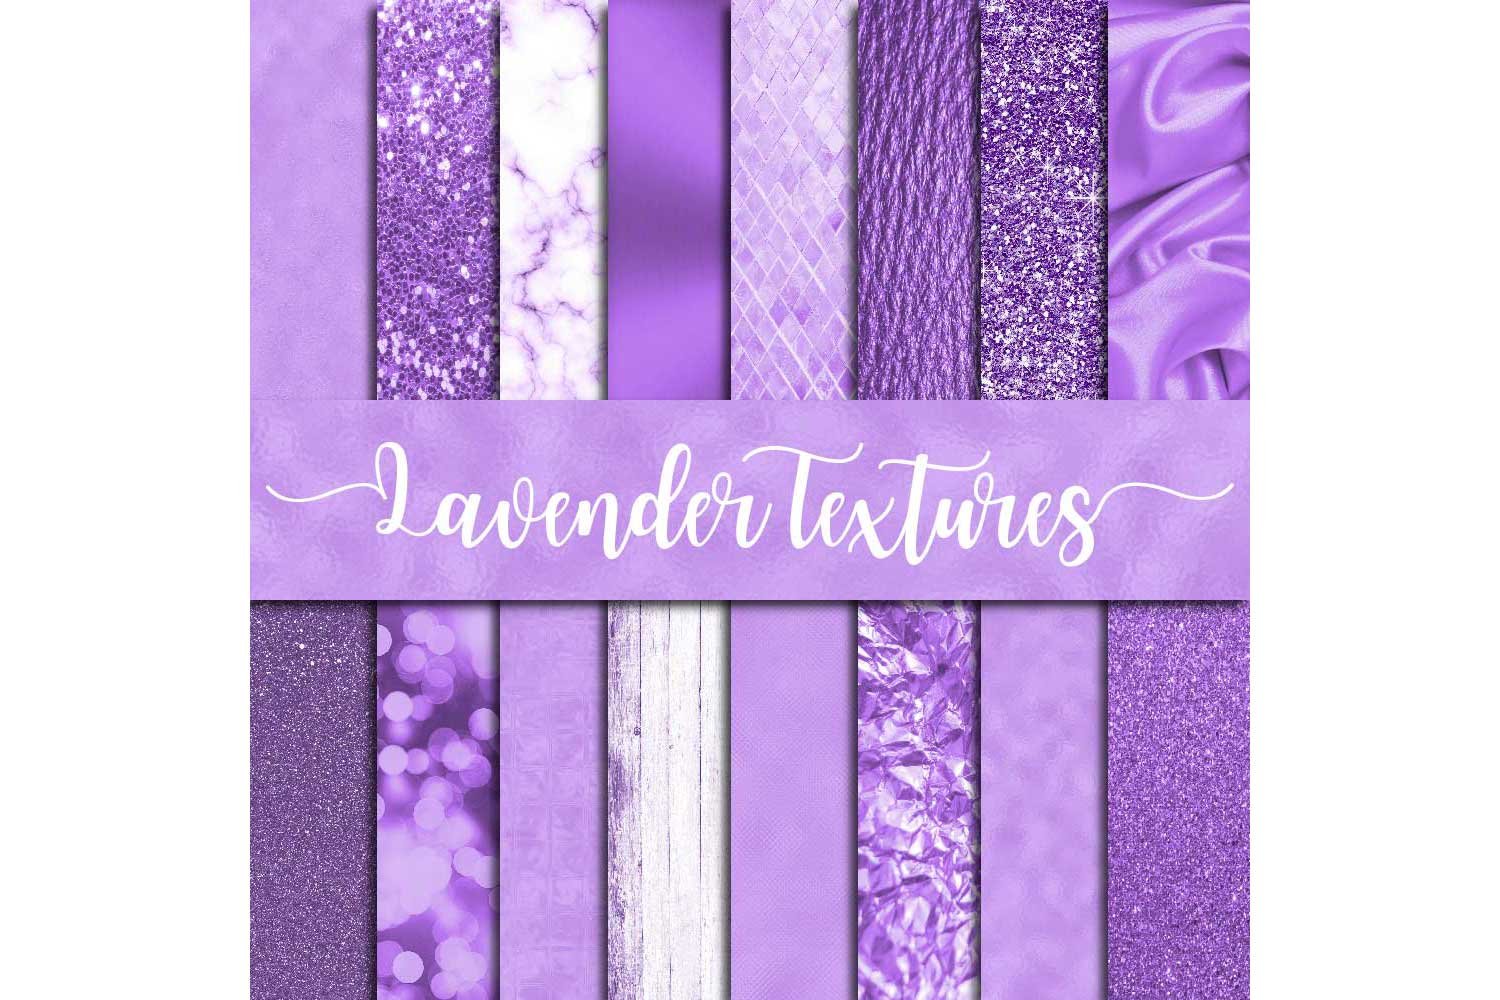 Lavender Textures Digital Paper cover image.